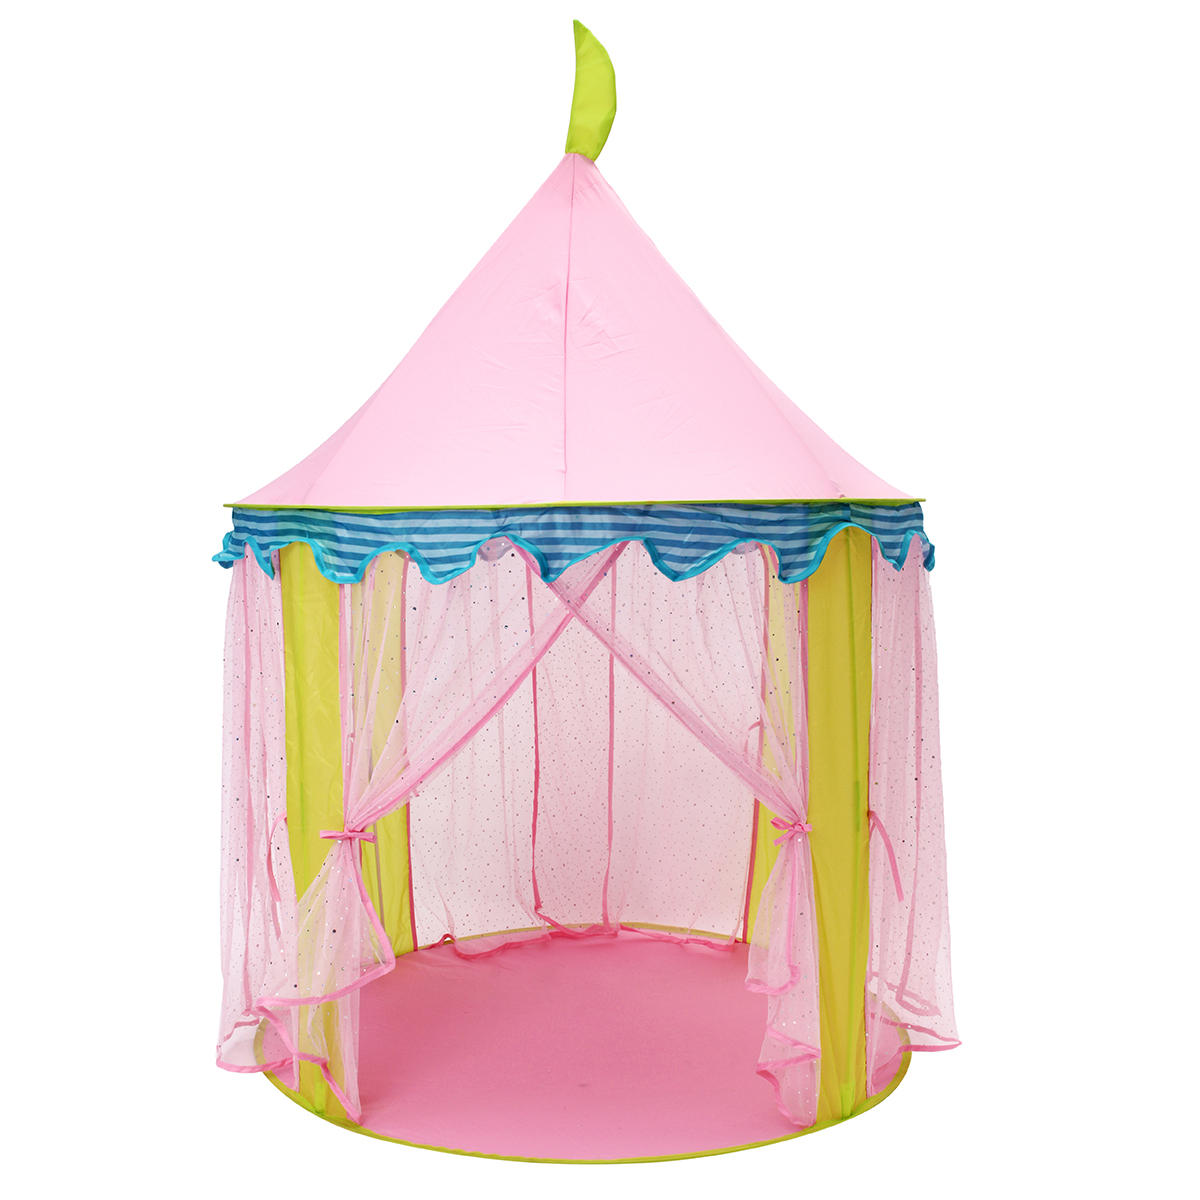 Protable Kids Rosa Princess Tent plegable casa de juguete para niños Kids Mosquito Large Game Room